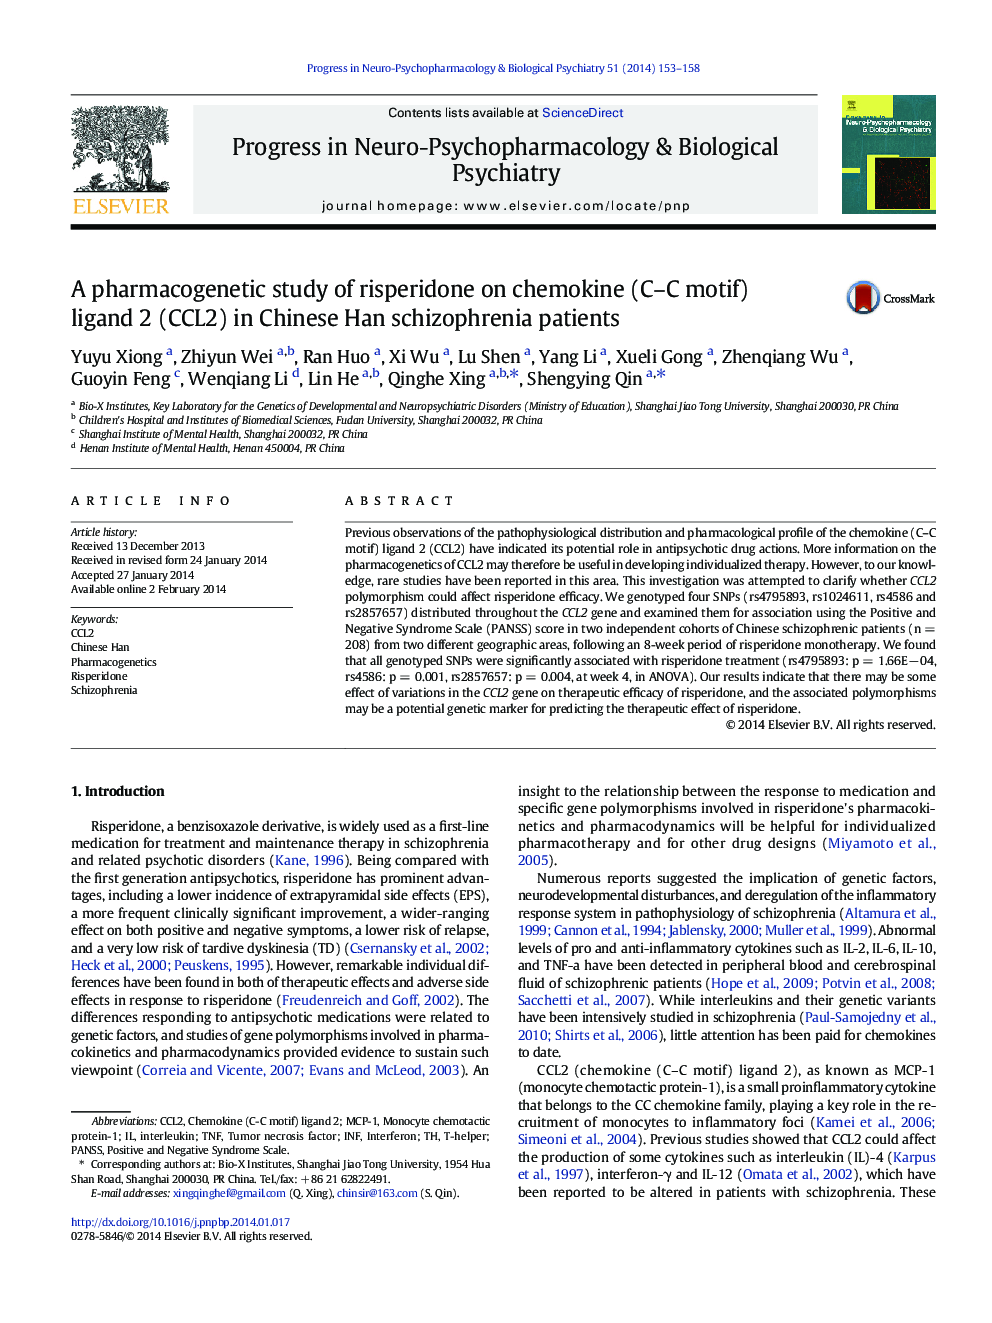 A pharmacogenetic study of risperidone on chemokine (C–C motif) ligand 2 (CCL2) in Chinese Han schizophrenia patients